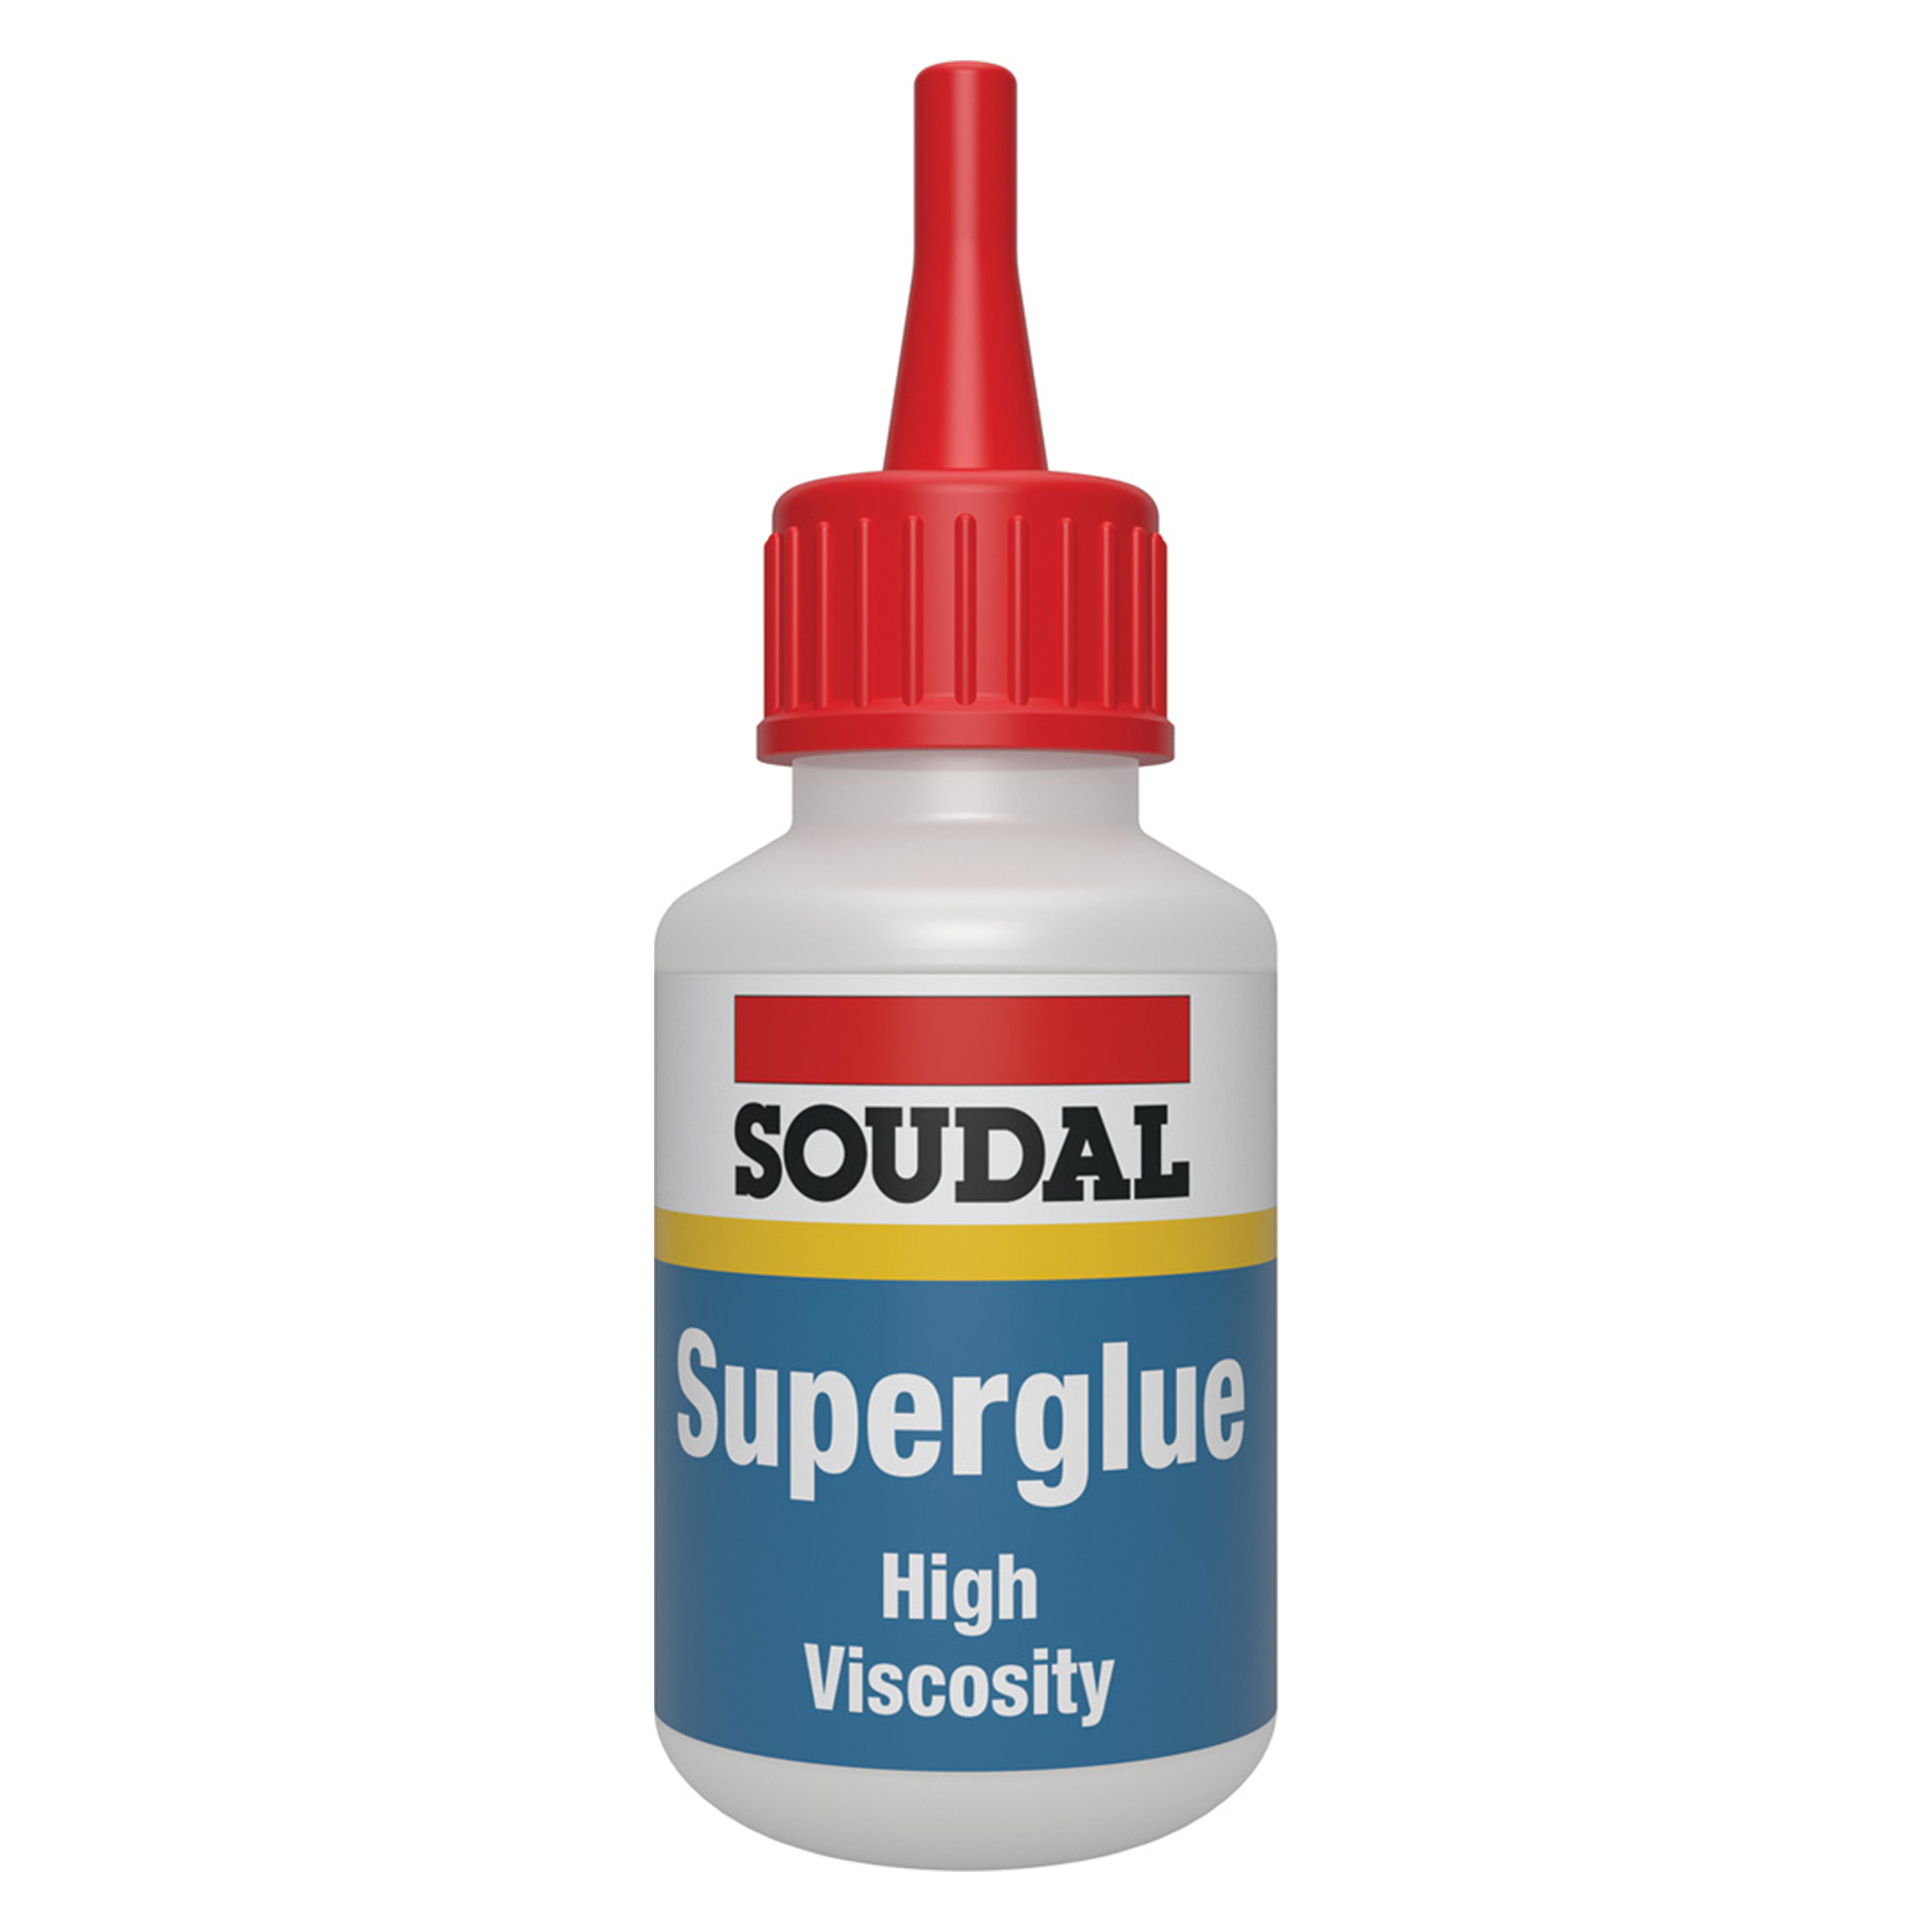 Soudal High Viscosity Superglue 20g